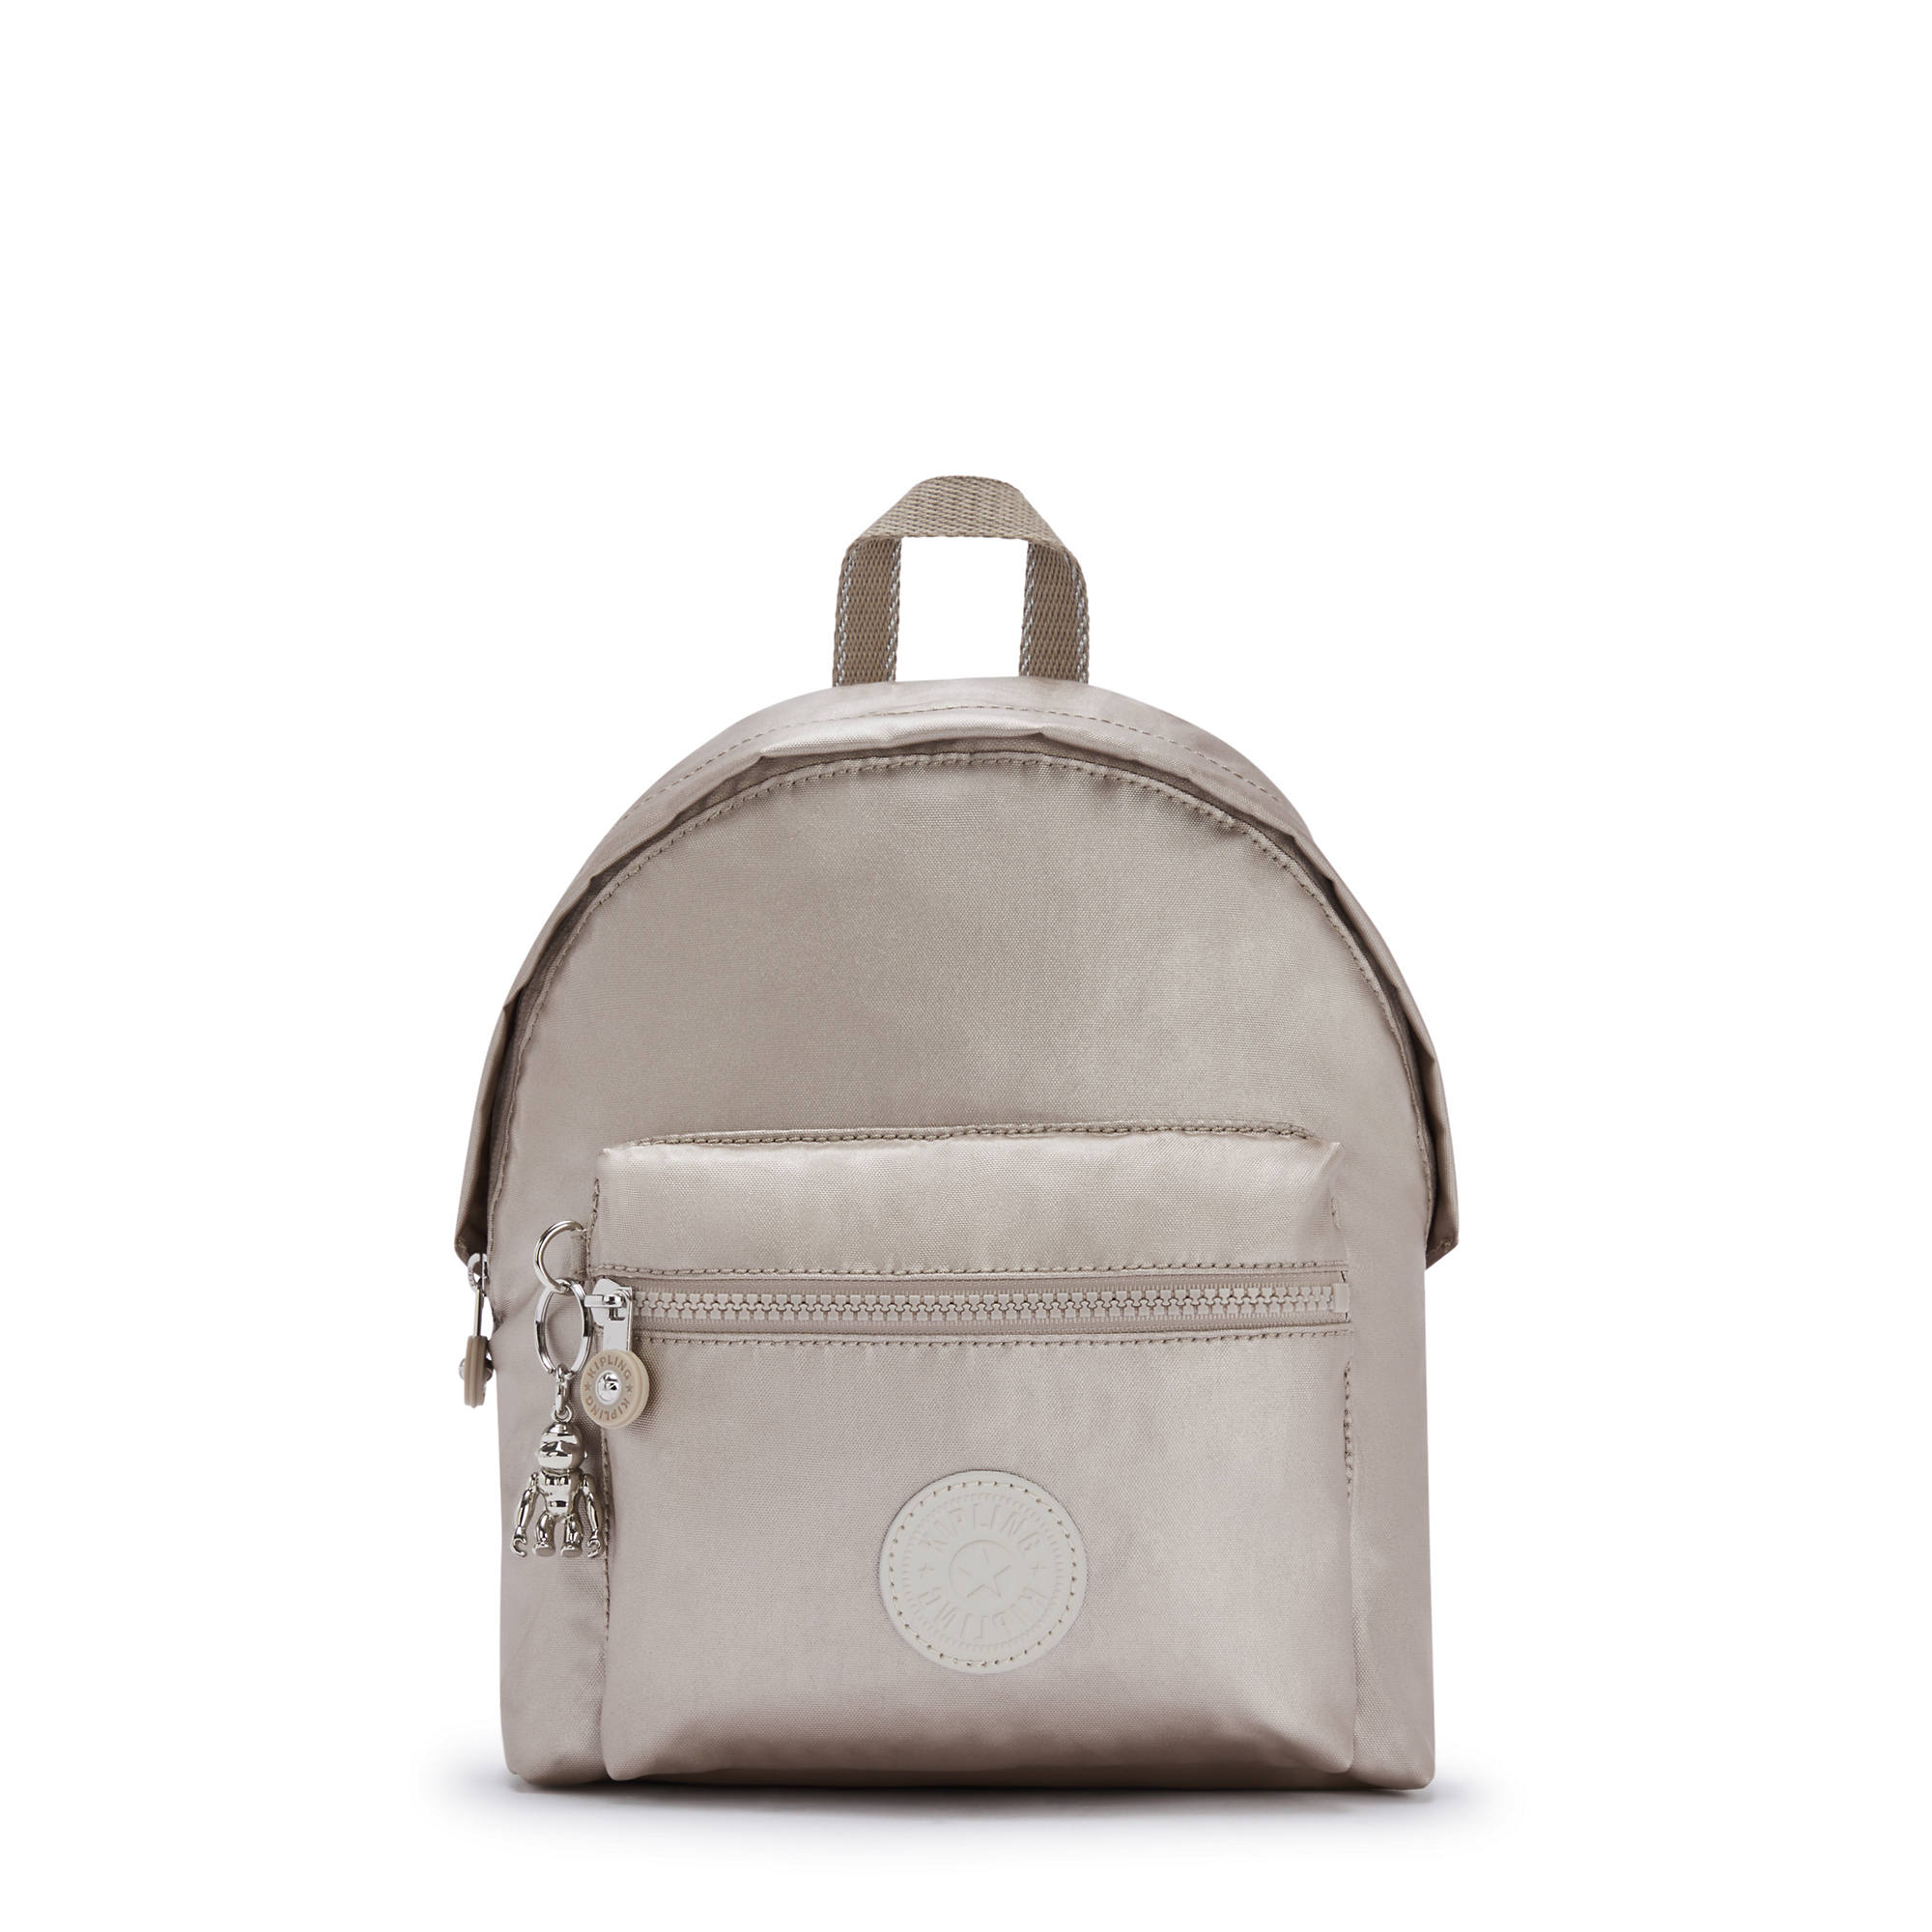 Kipling Reposa Metallic Backpack Metallic Glow | eBay